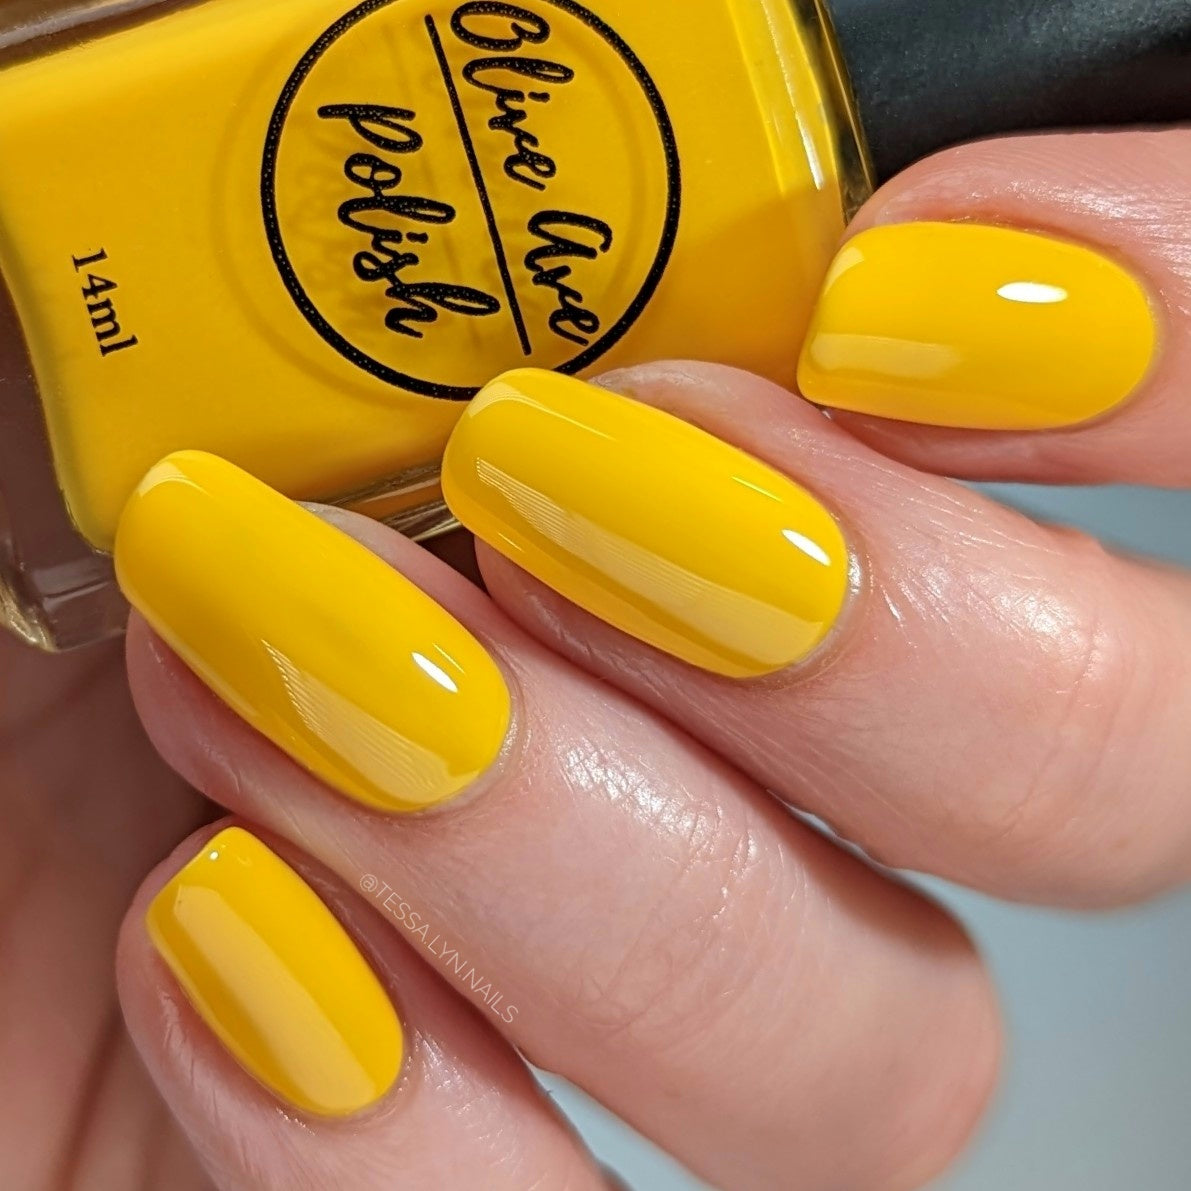 sunny yellow nail polish swatch on pale skin tone